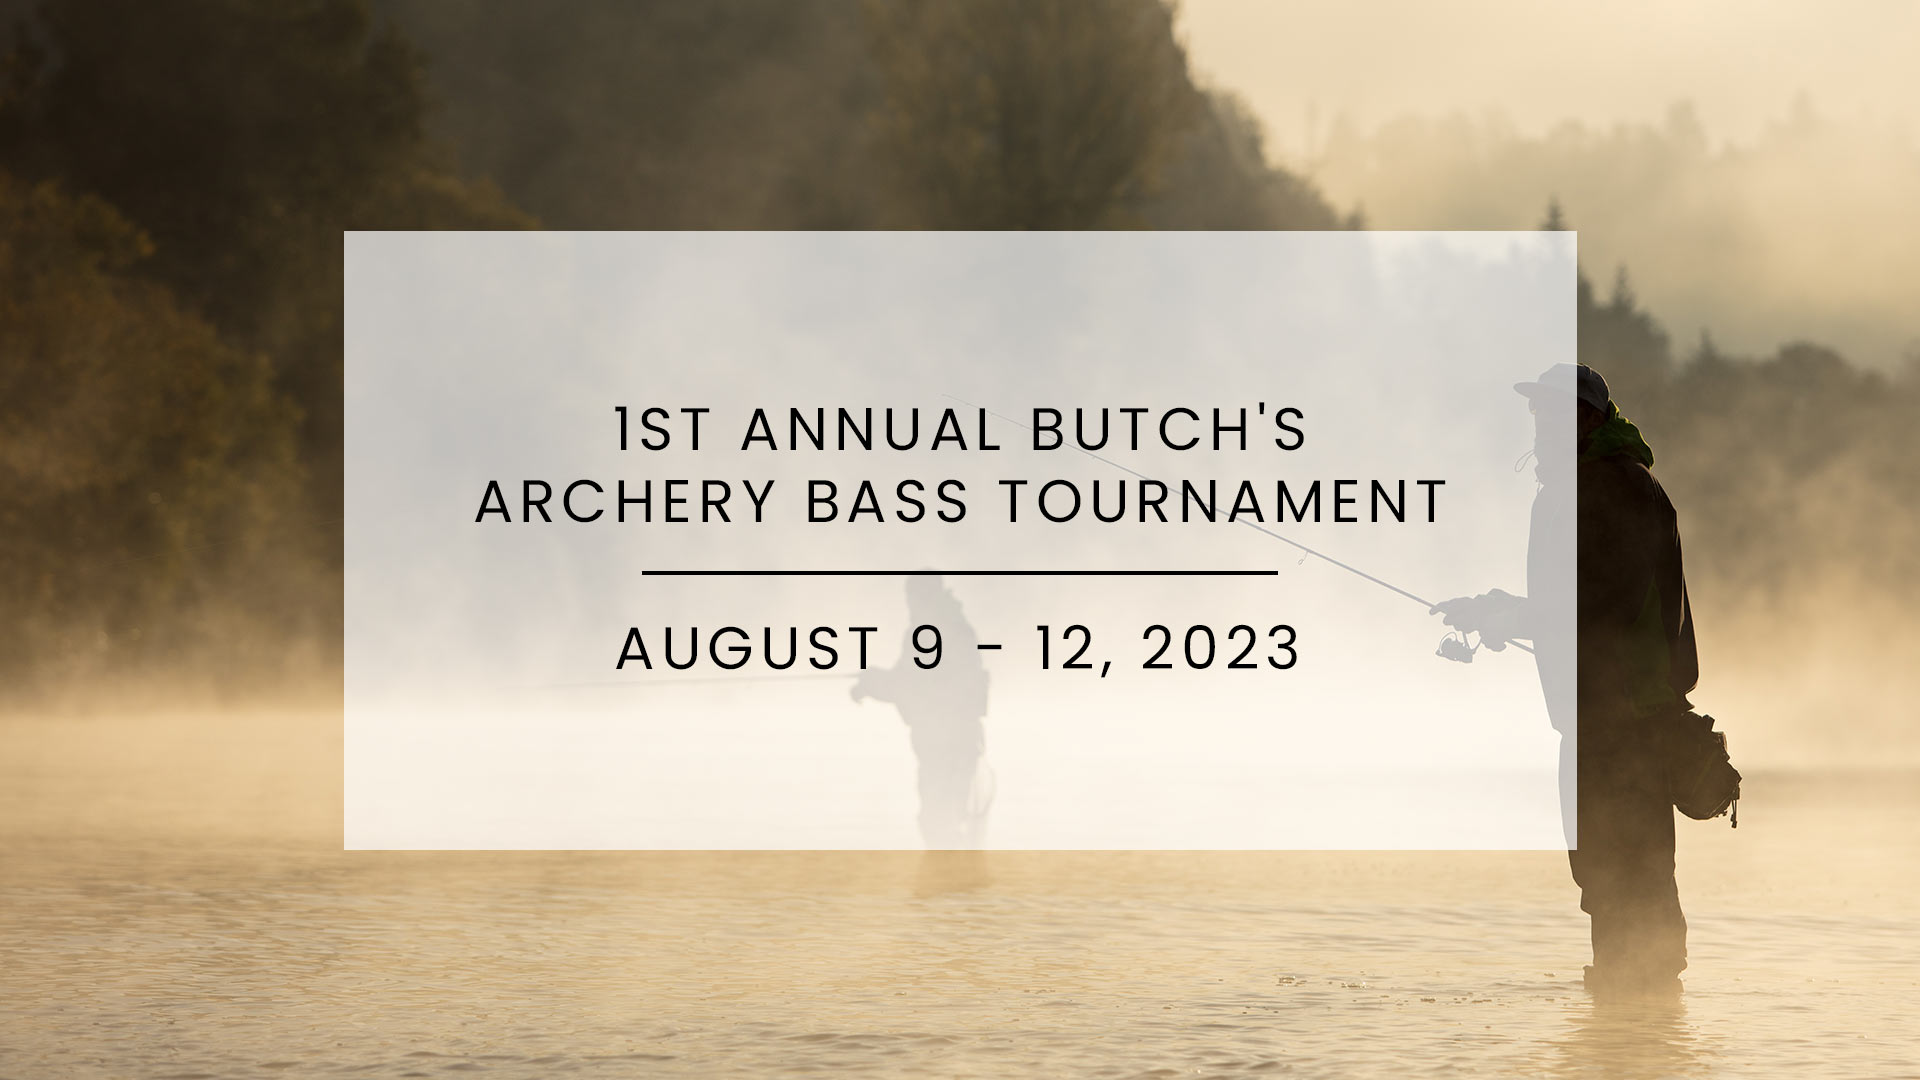 1st Annual Butch's Archery Bass Tournament